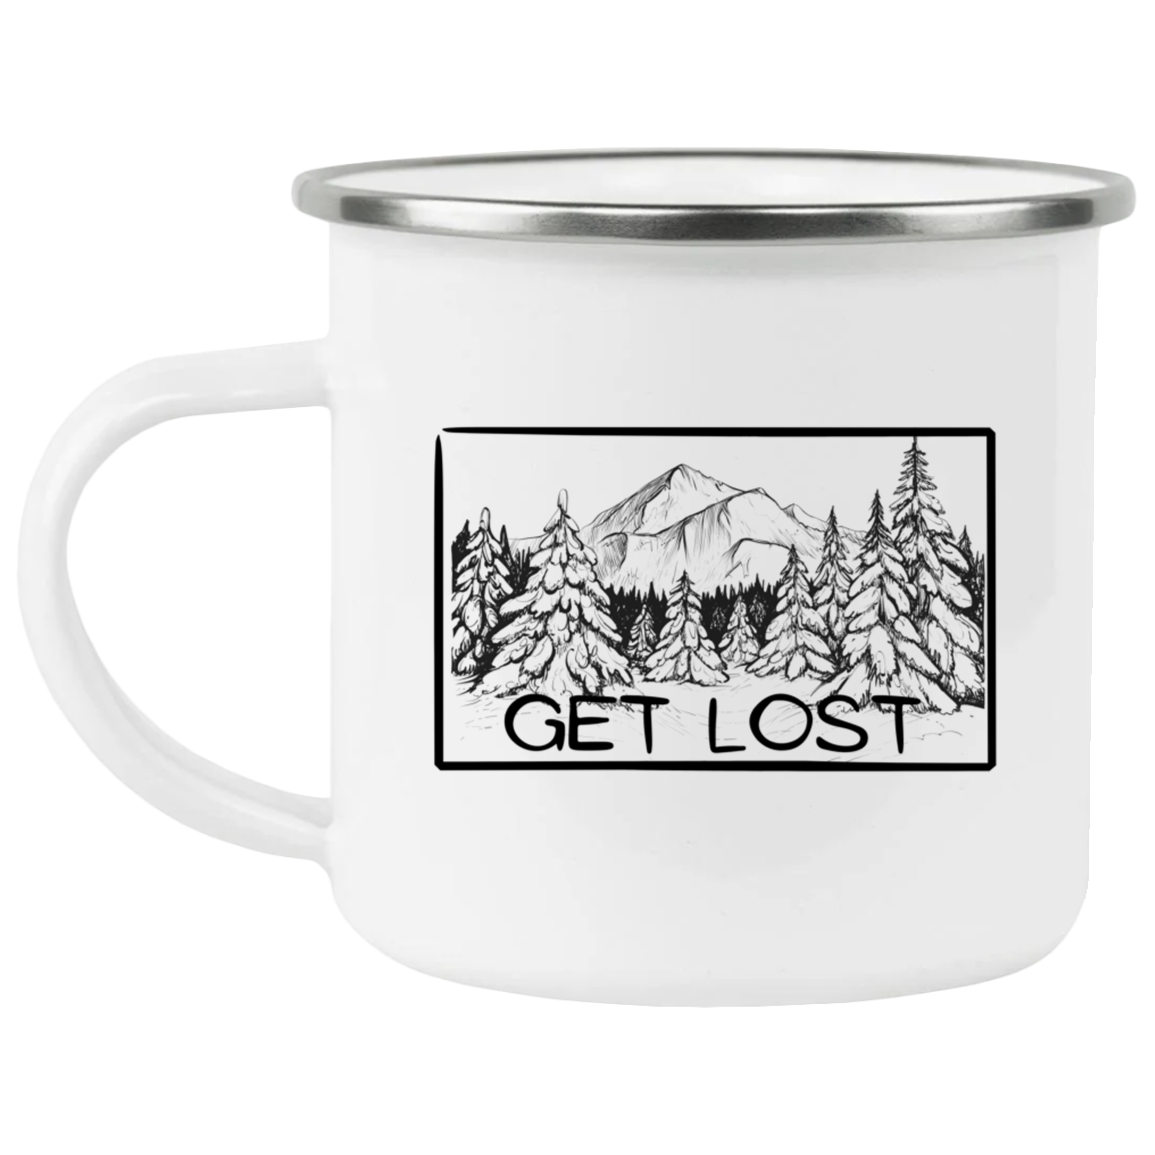 Get Lost,Enamel Camping Mug